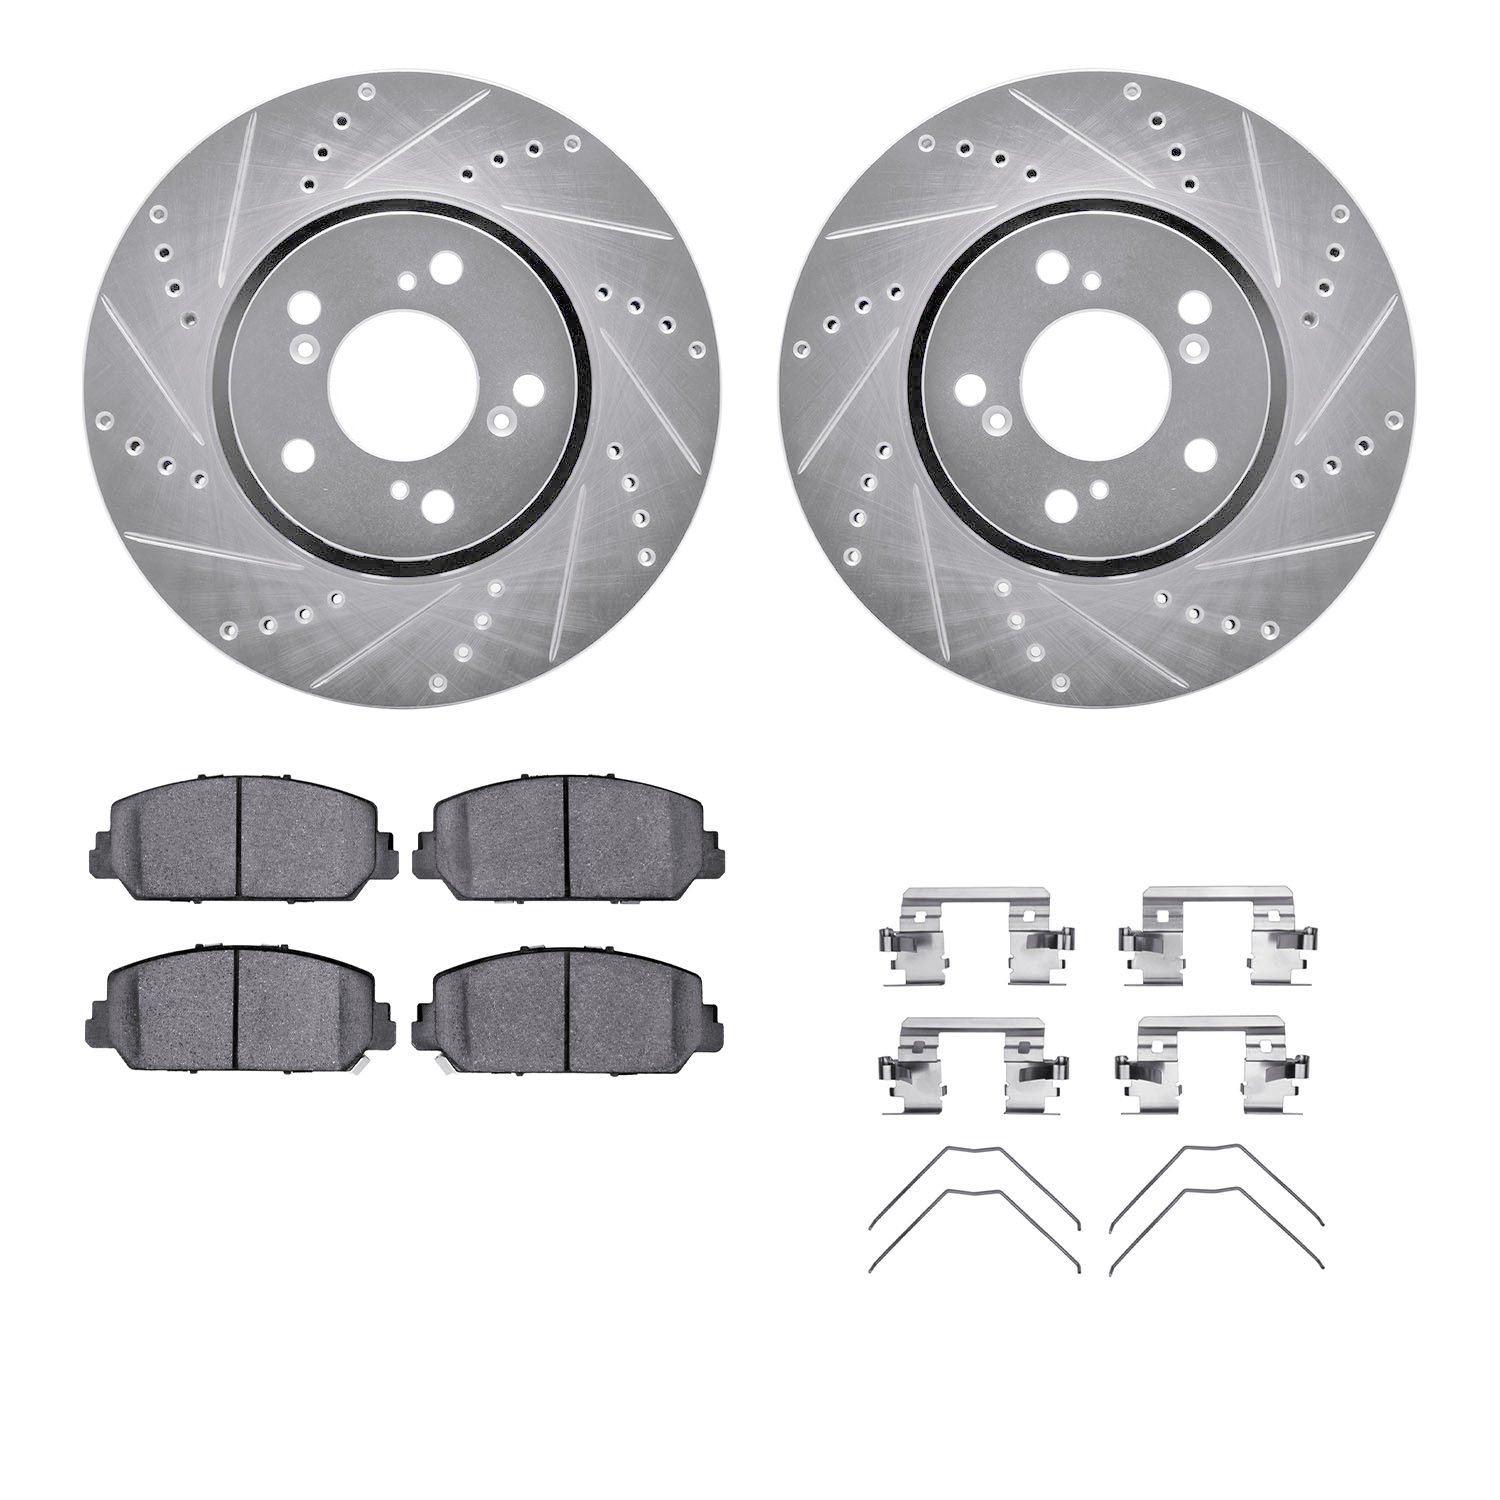 7312-58026 Drilled/Slotted Brake Rotor with 3000-Series Ceramic Brake Pads Kit & Hardware [Silver], 2014-2020 Acura/Honda, Posit